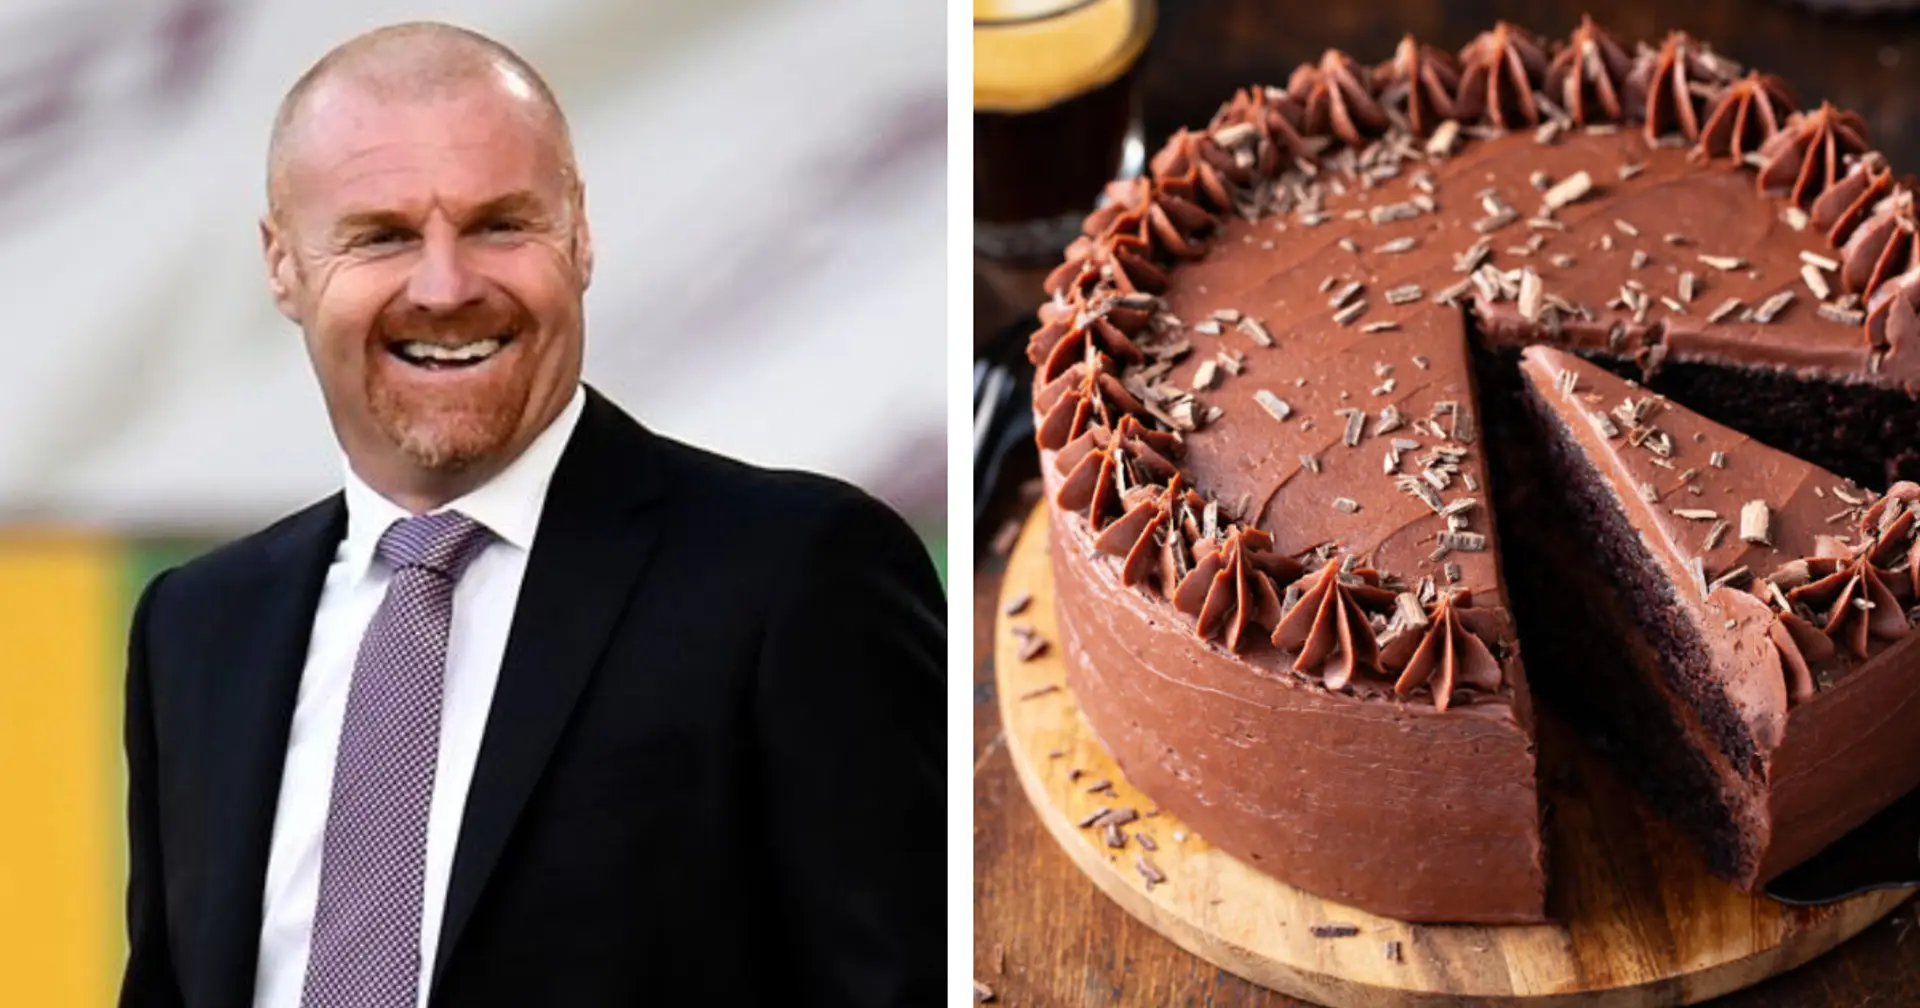 Sean Dyche makes Burnley players follow bizarre cake rule during birthdays